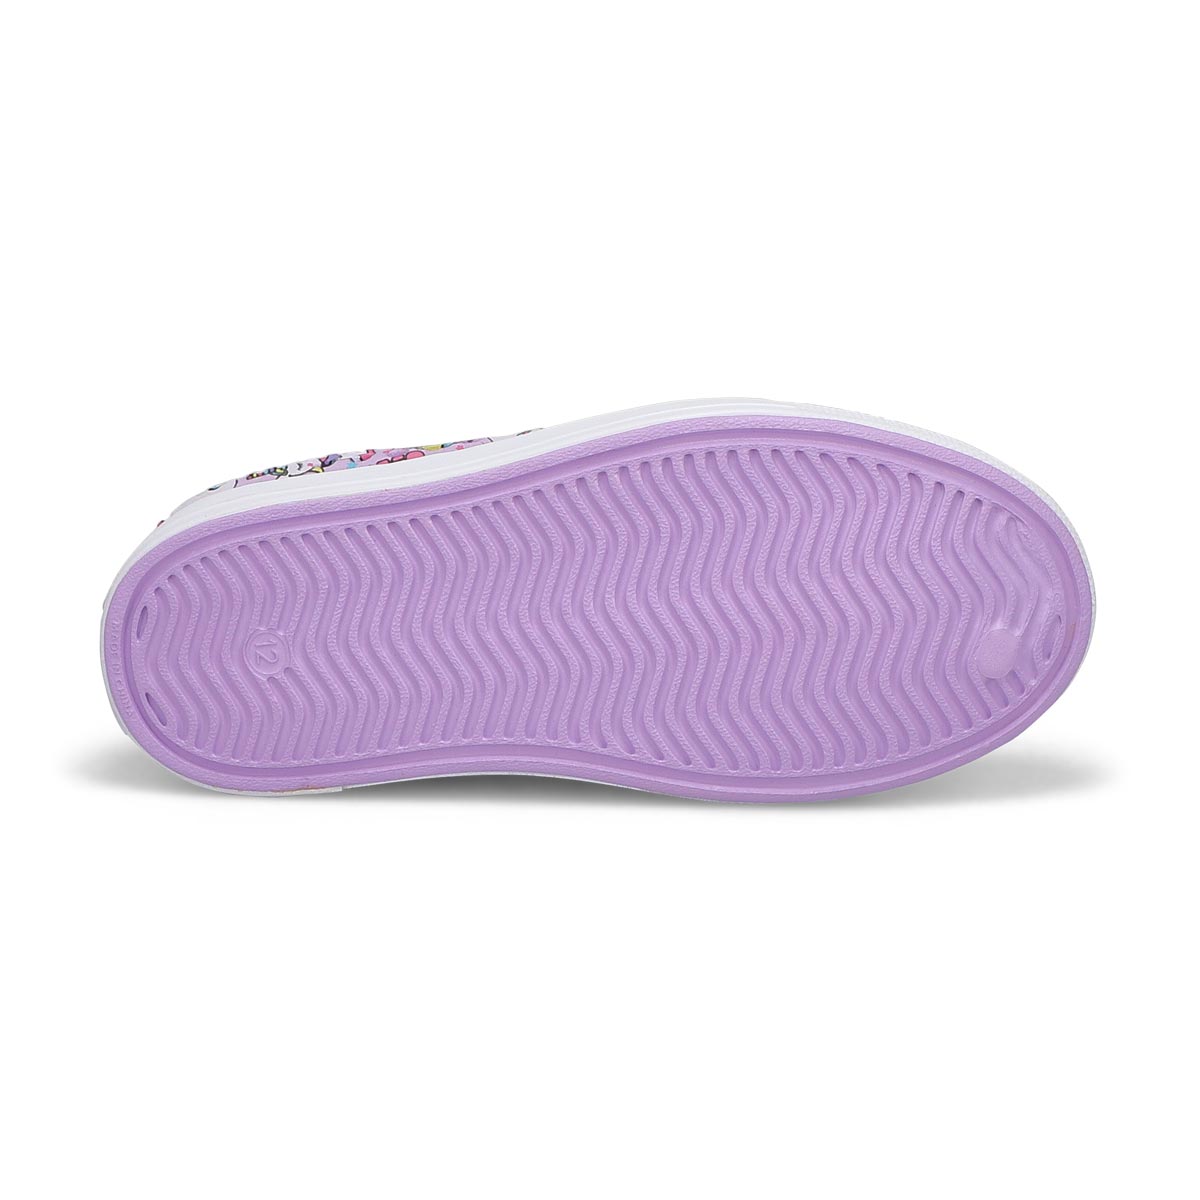 Girls' Guzman Steps Slip On Shoe-Lavender/Aqua